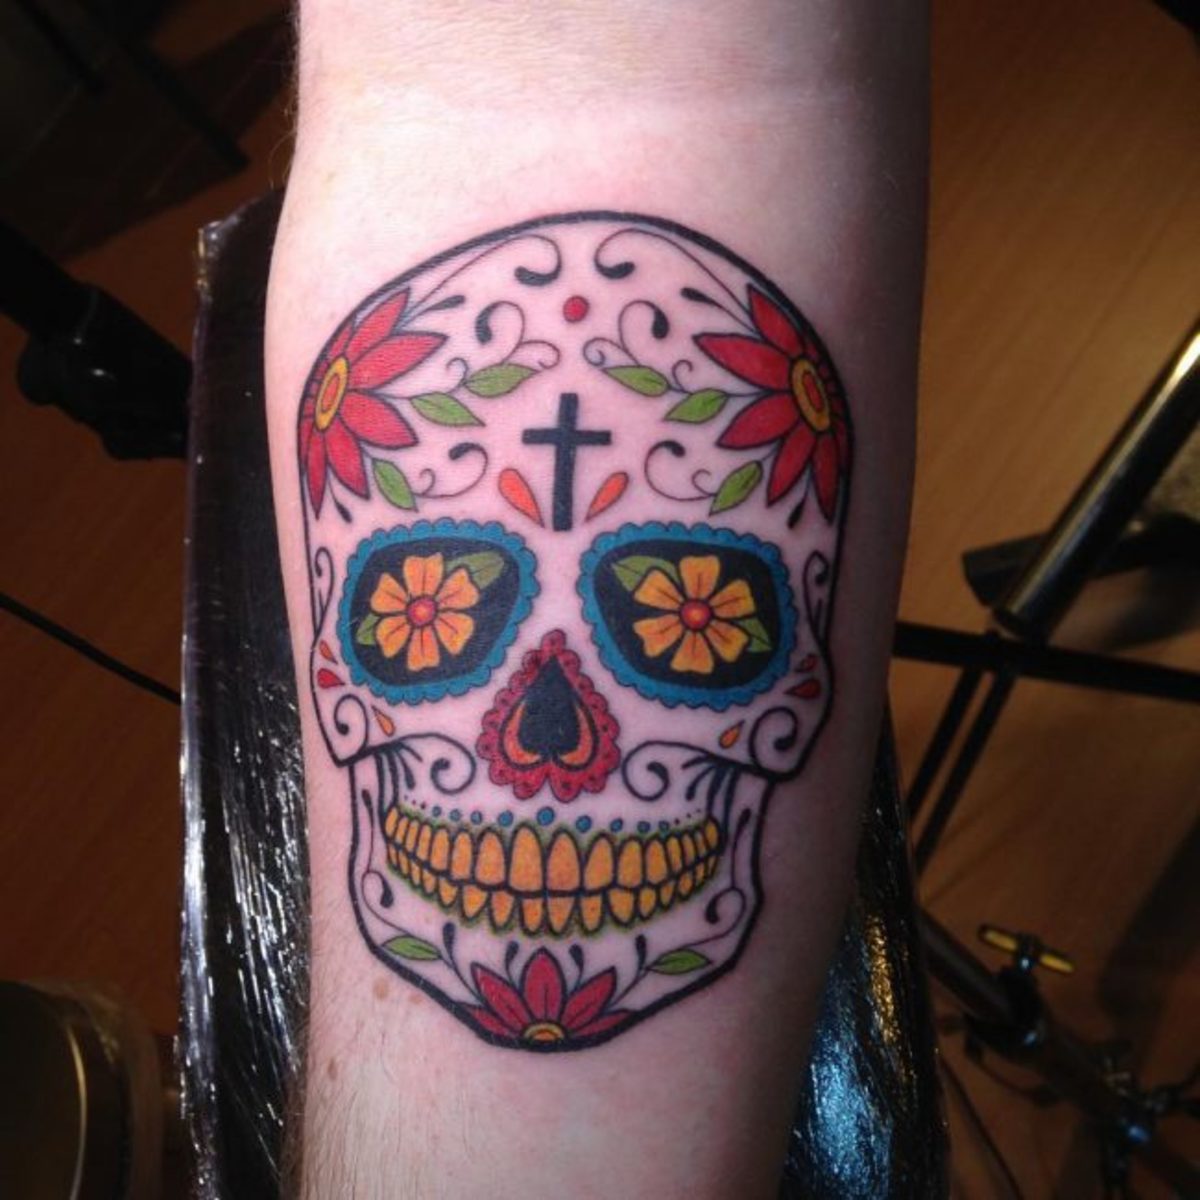 Meksikon-tatuointi_-24-650x650